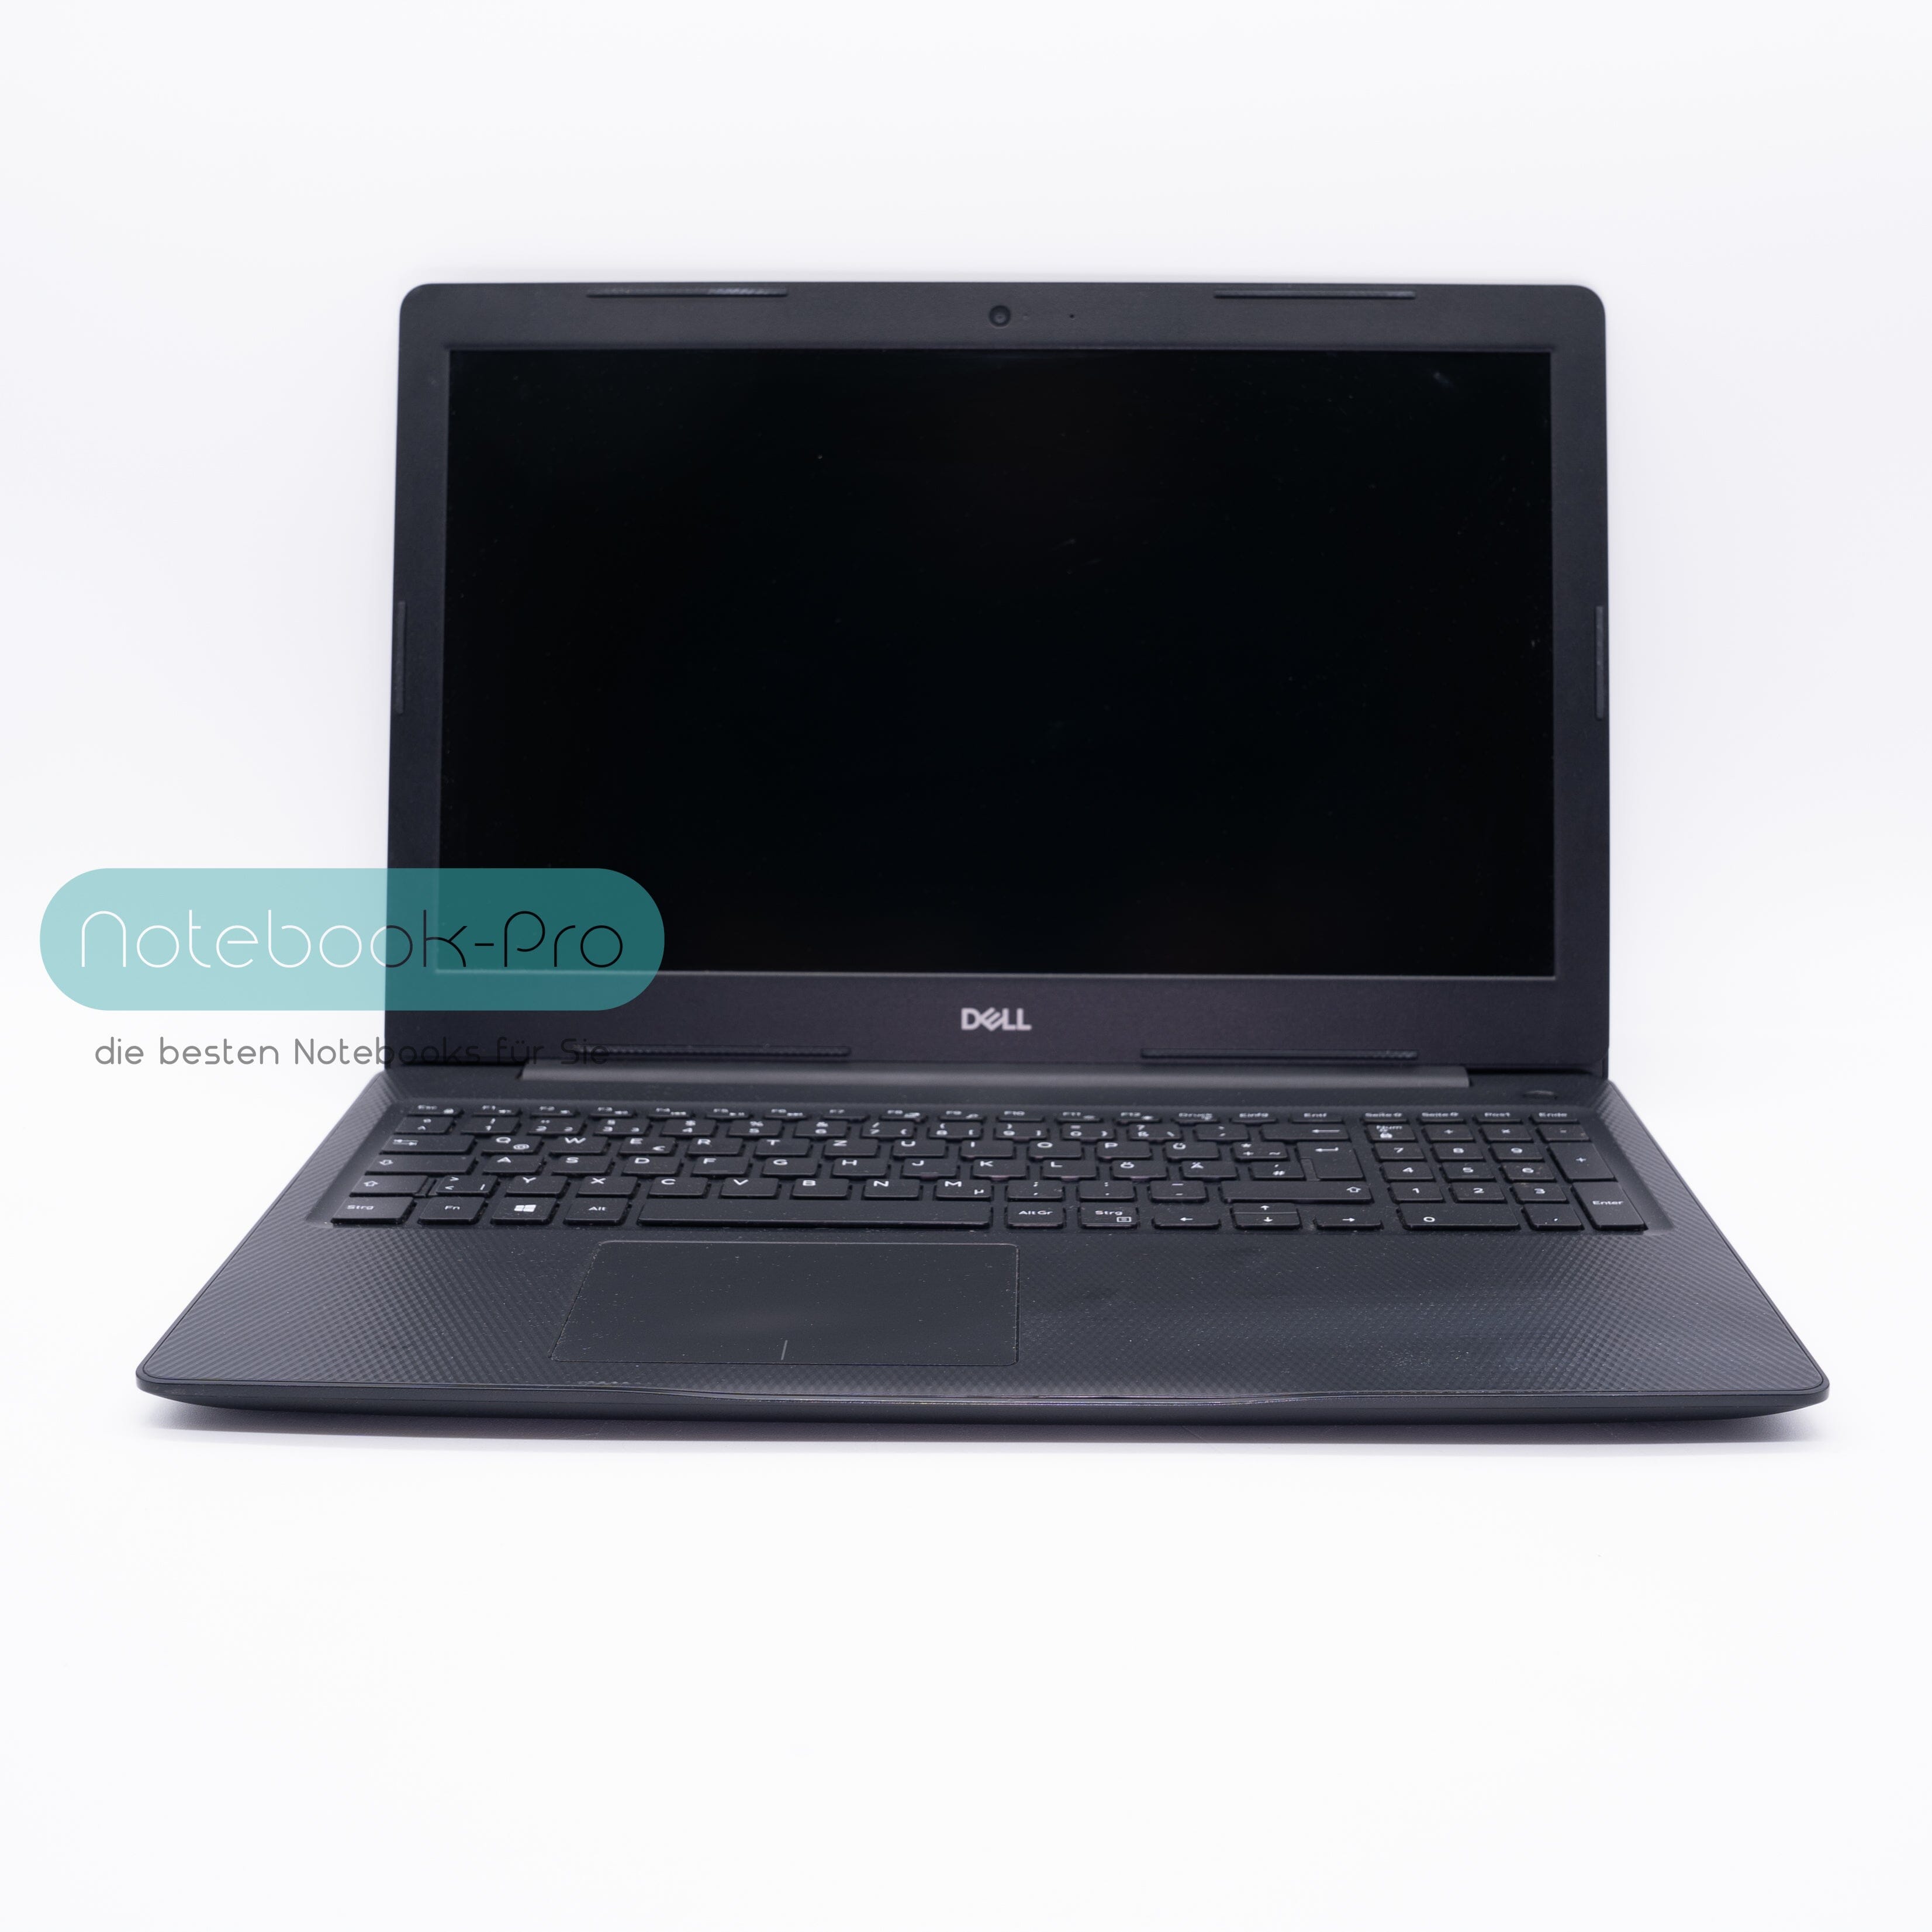 Dell Inspiron 3593 i5-1035G1 8GB 256GB SSD GeForce MX230 Win 11 Pro Laptops Notebook-Pro 